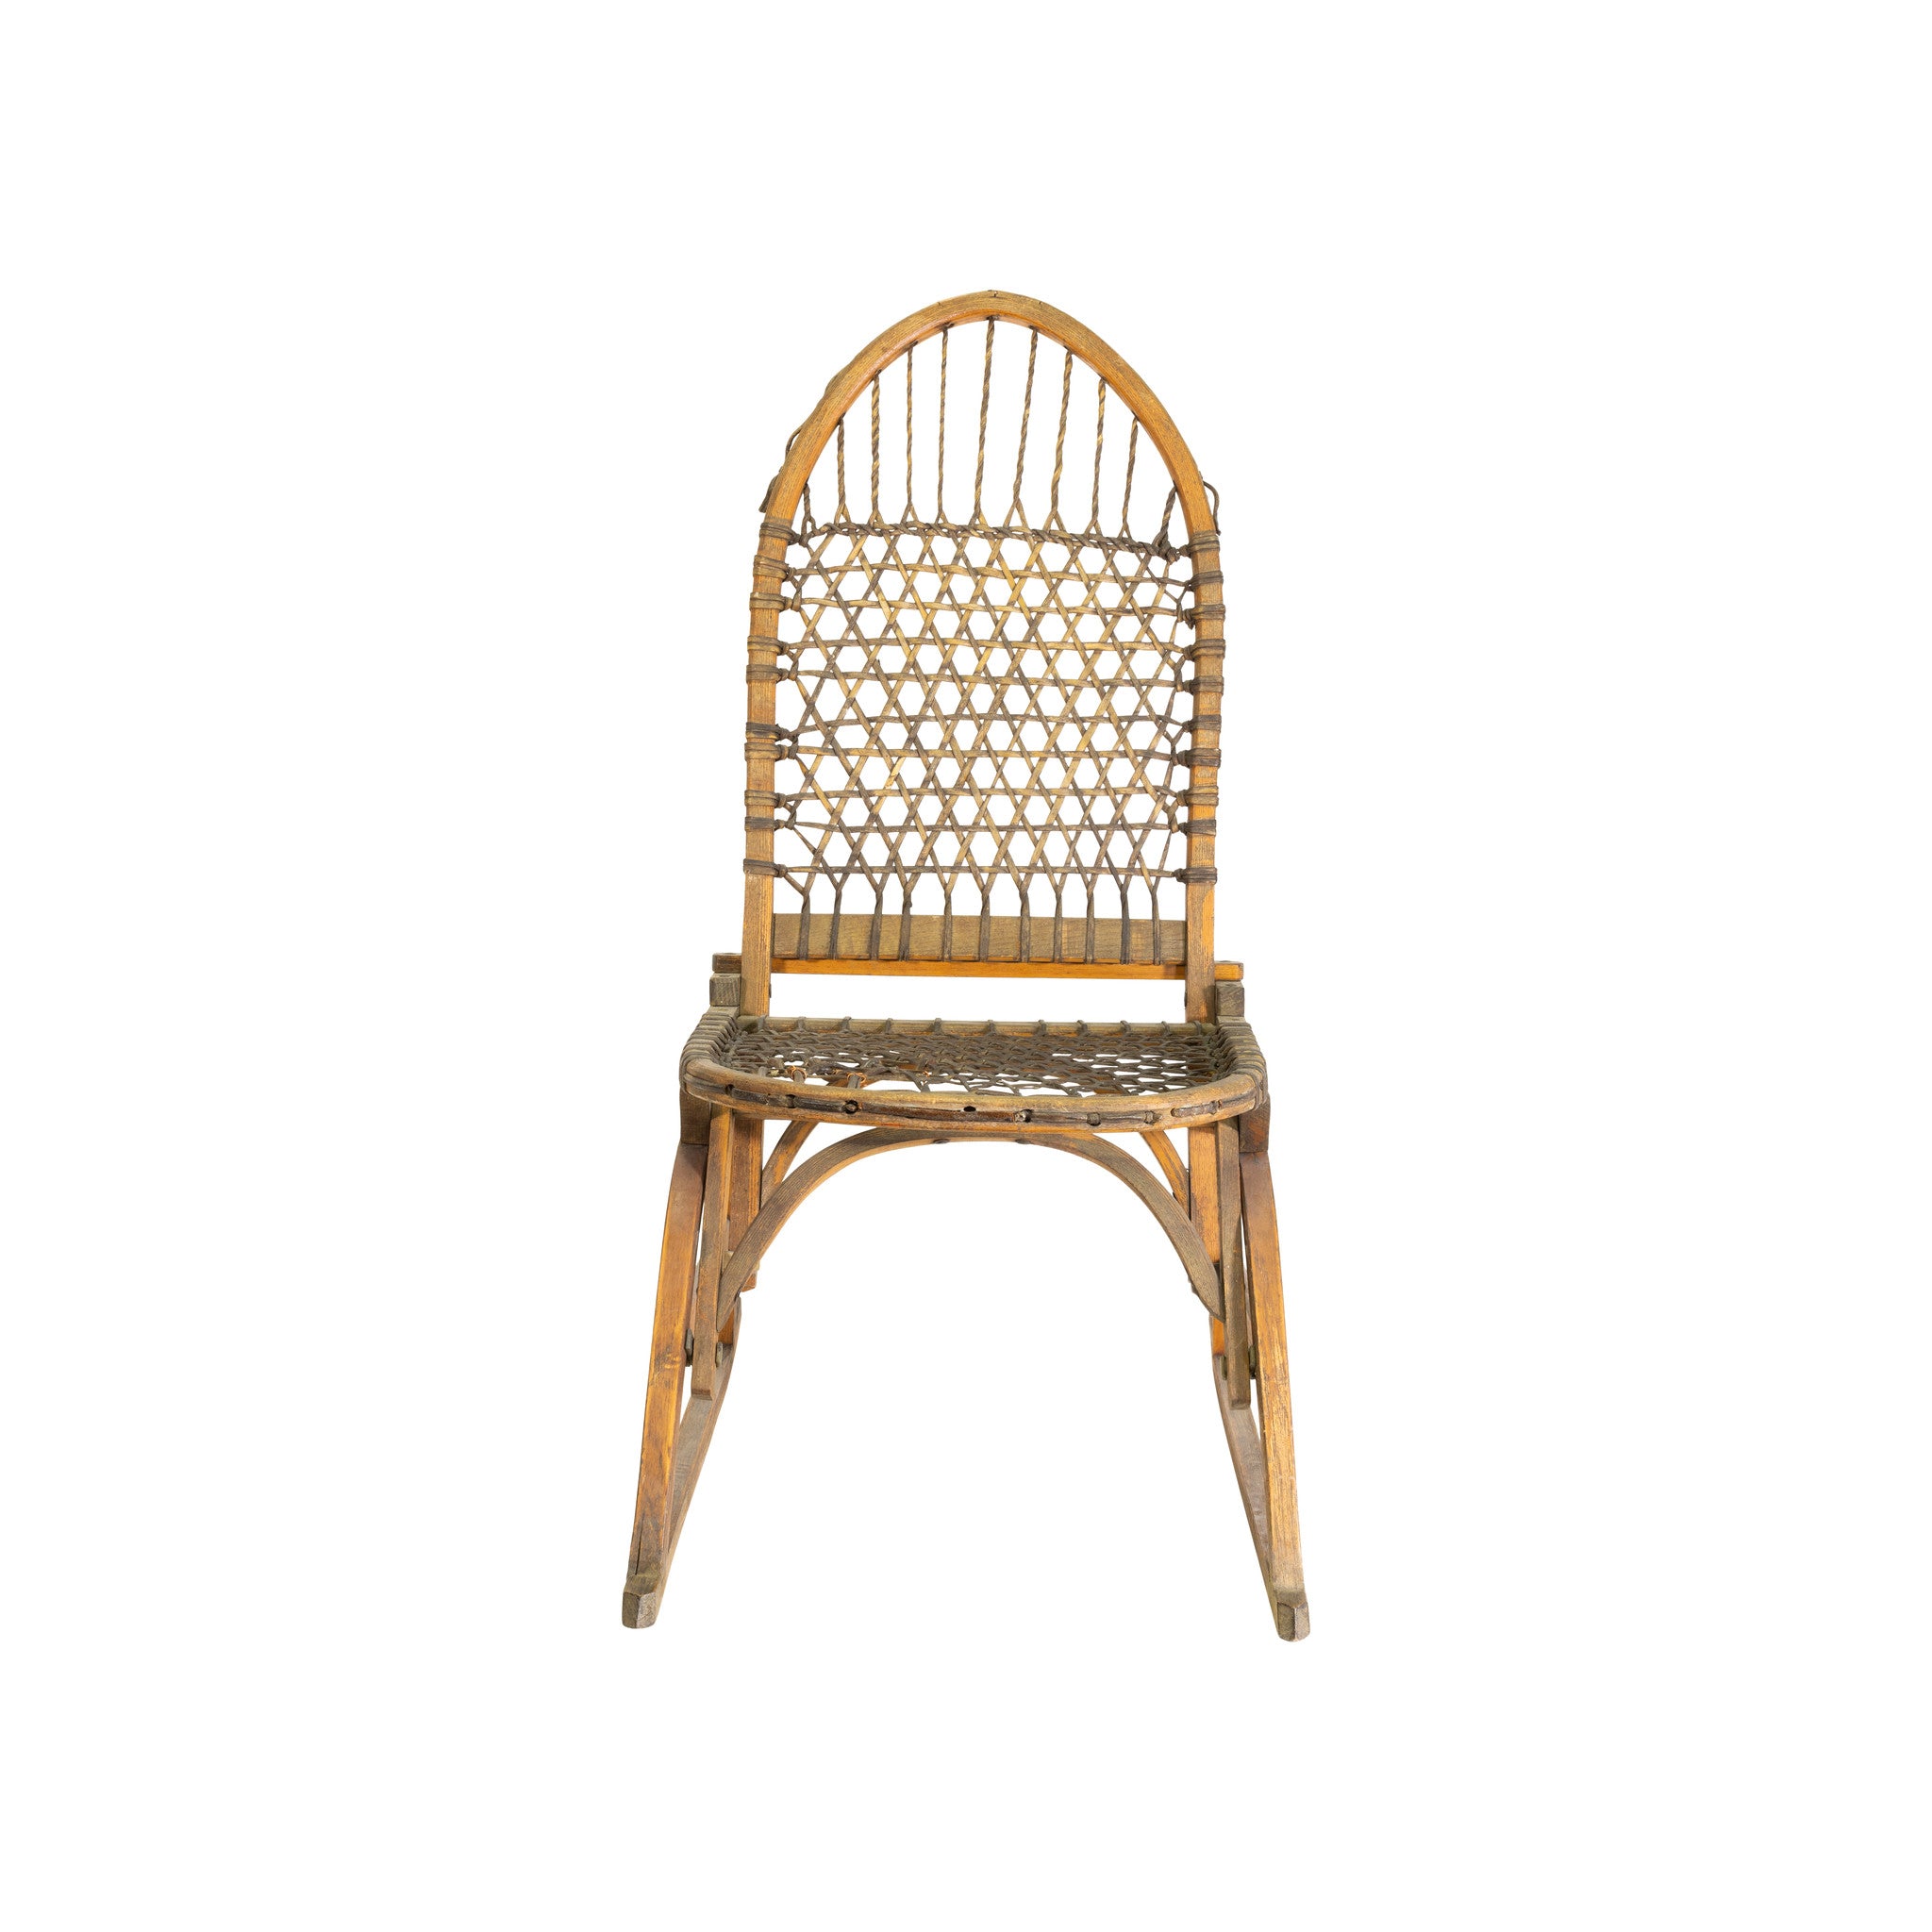 W.S. Tubbs Snowshoe Chair